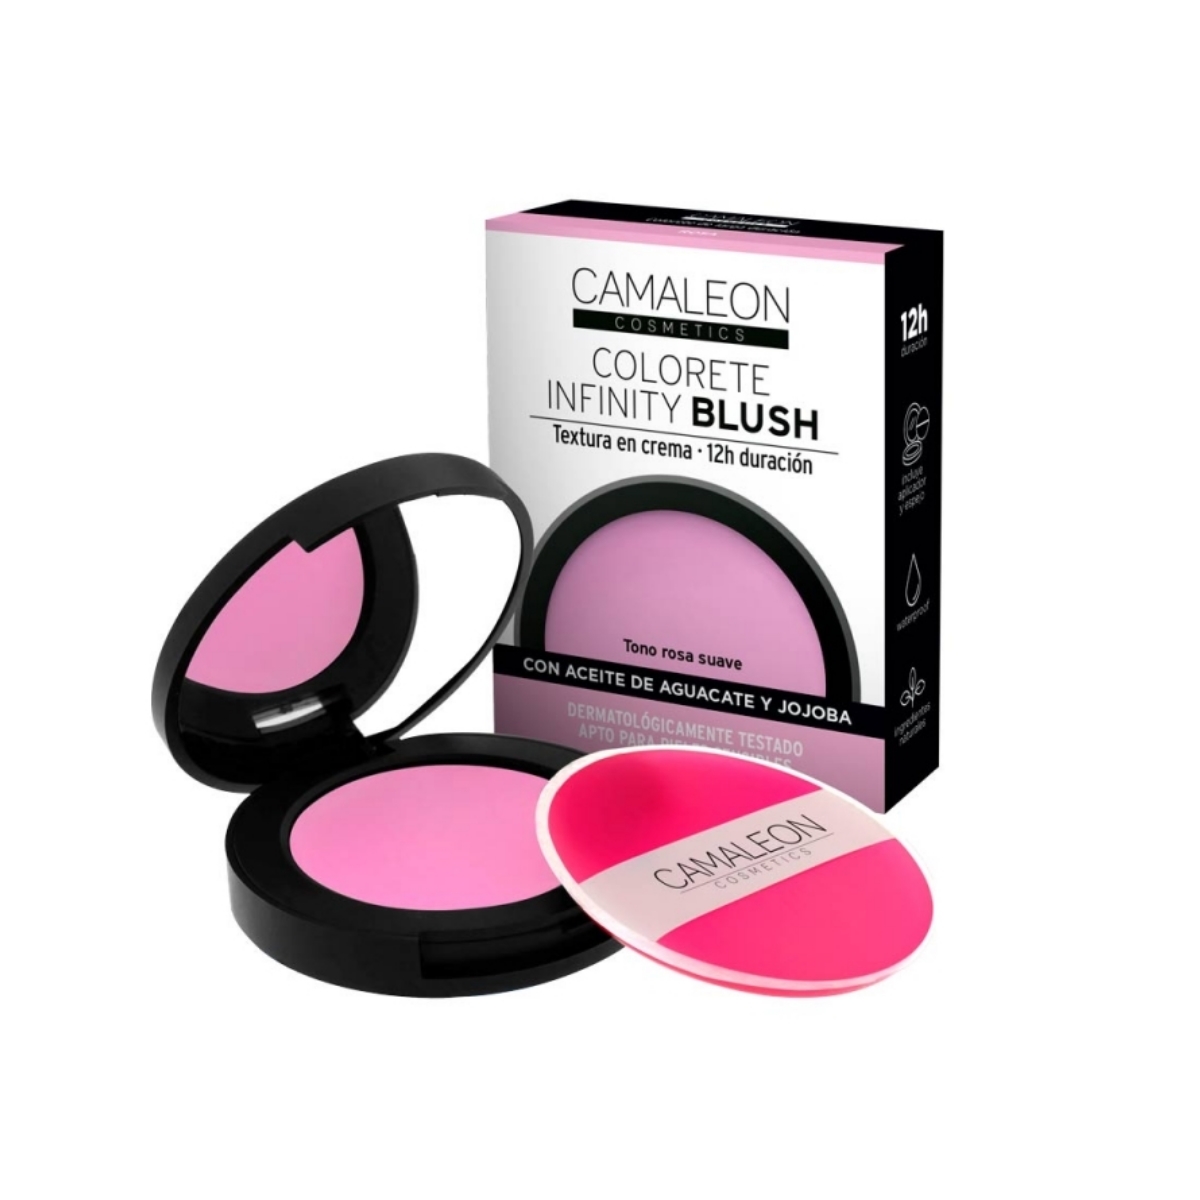 Colorete Infinity Blush de Camaleon Cosmetics.